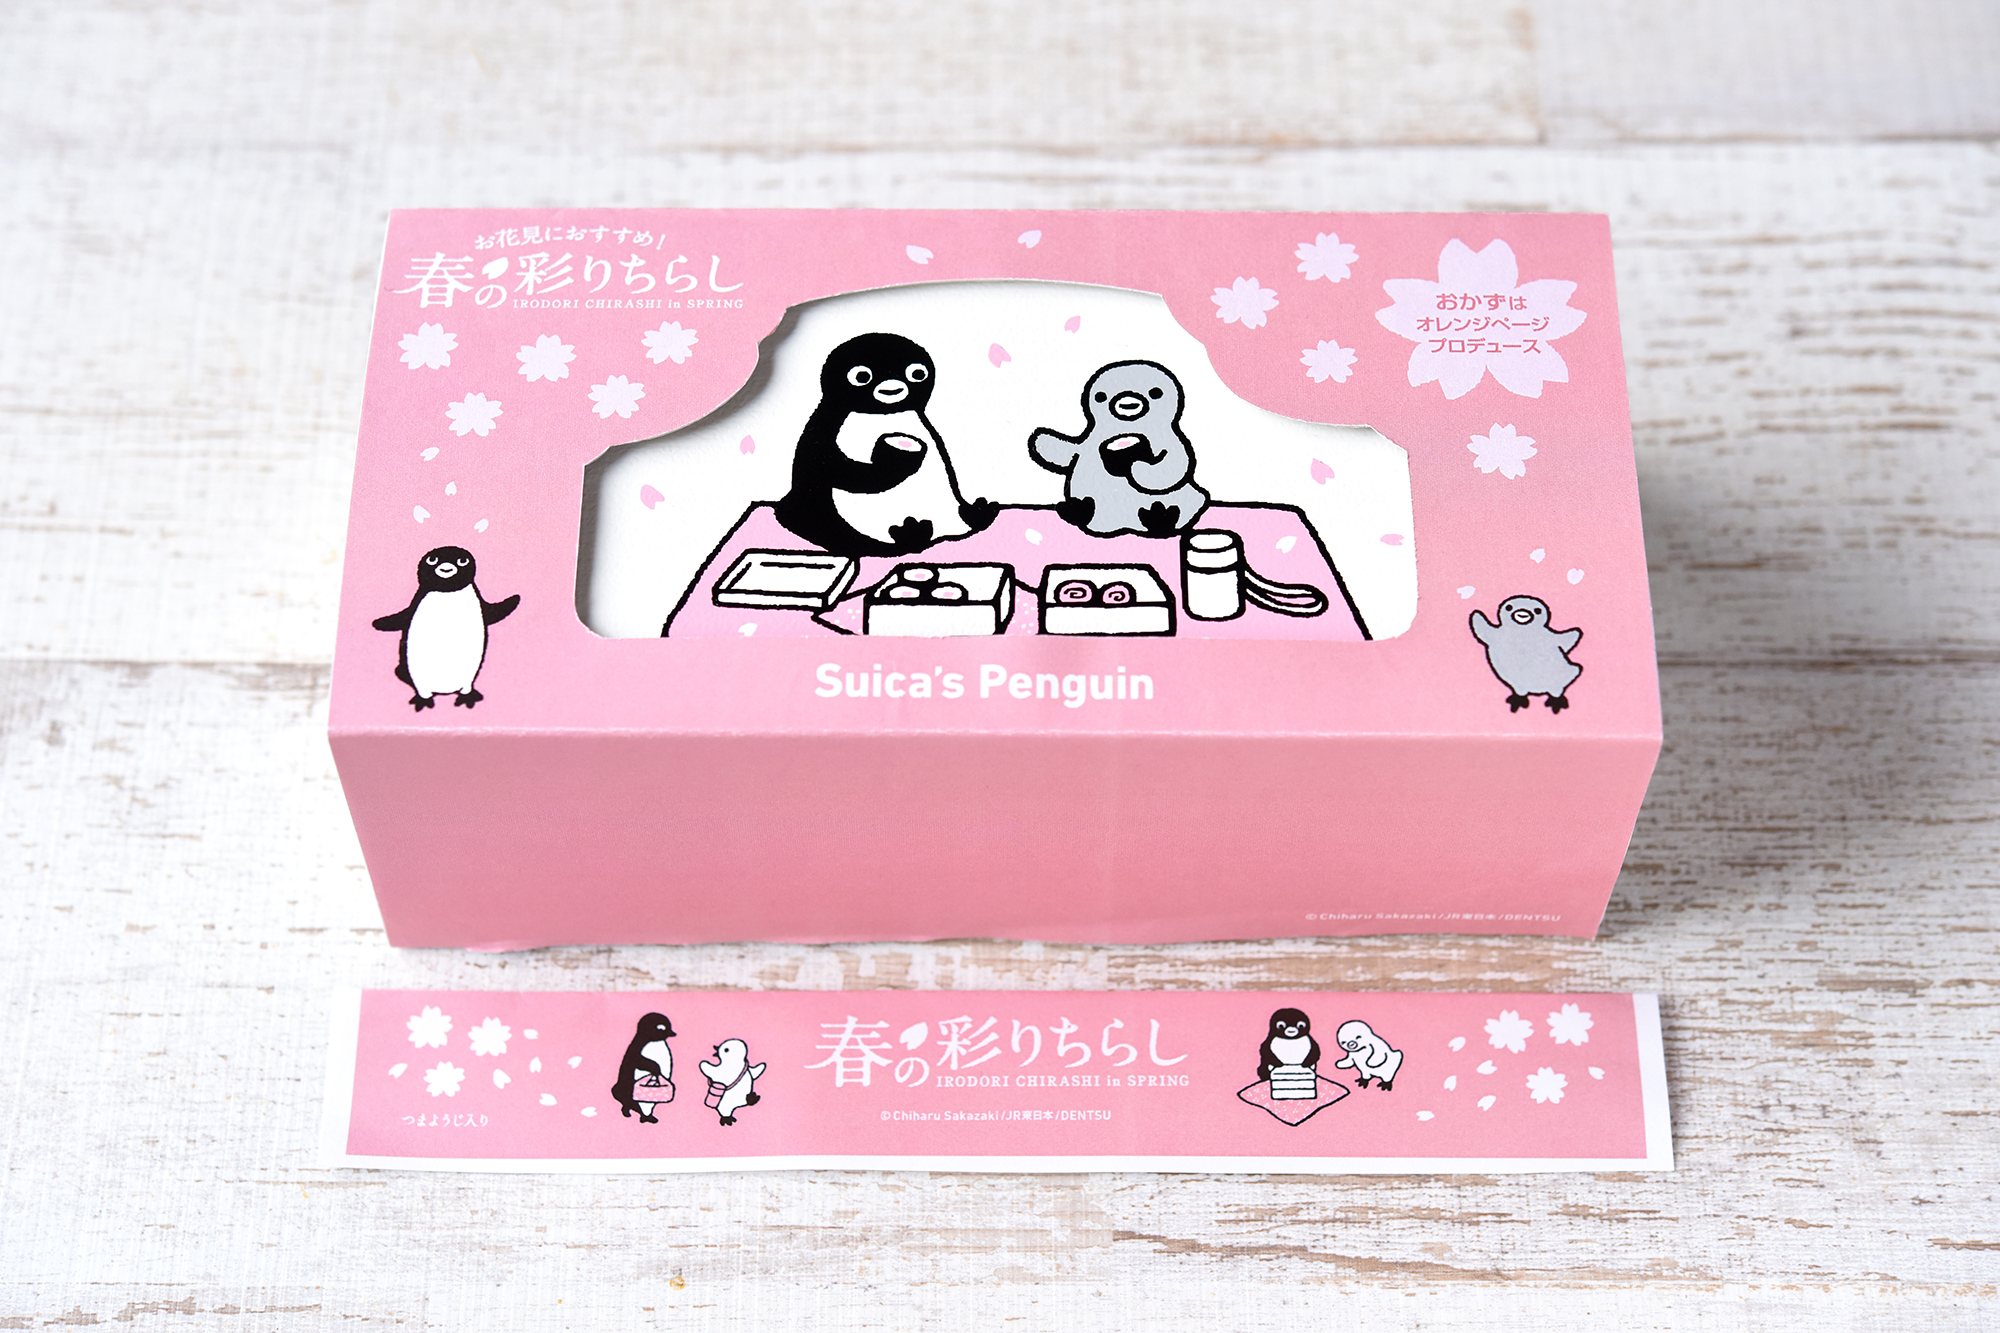 「Suicaのペンギン 春の彩りちらし」パッケージ